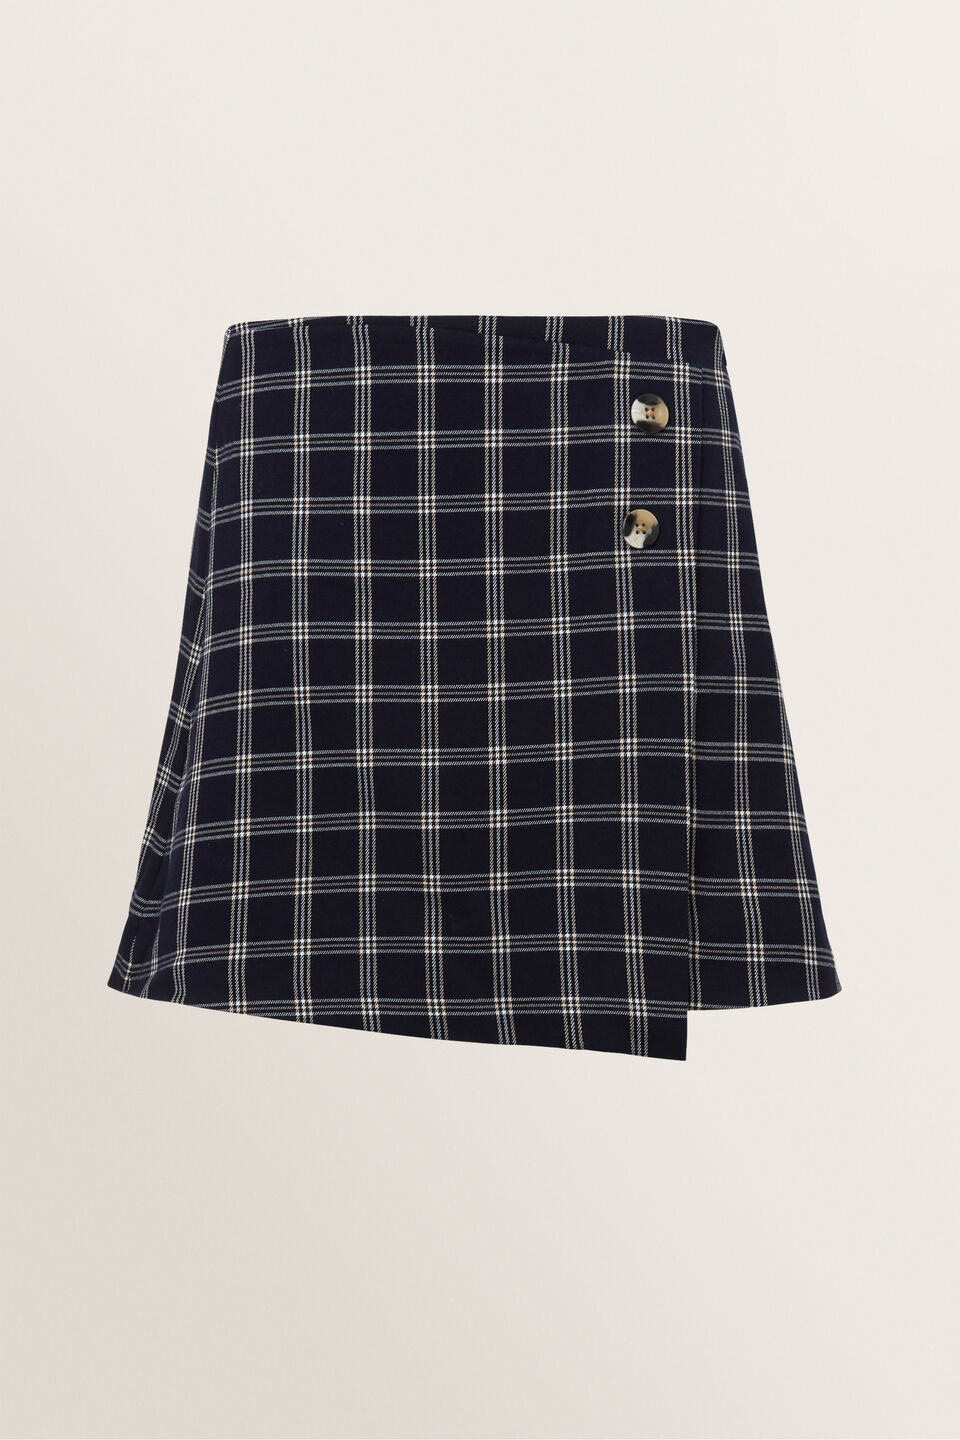 Wales Skirt  